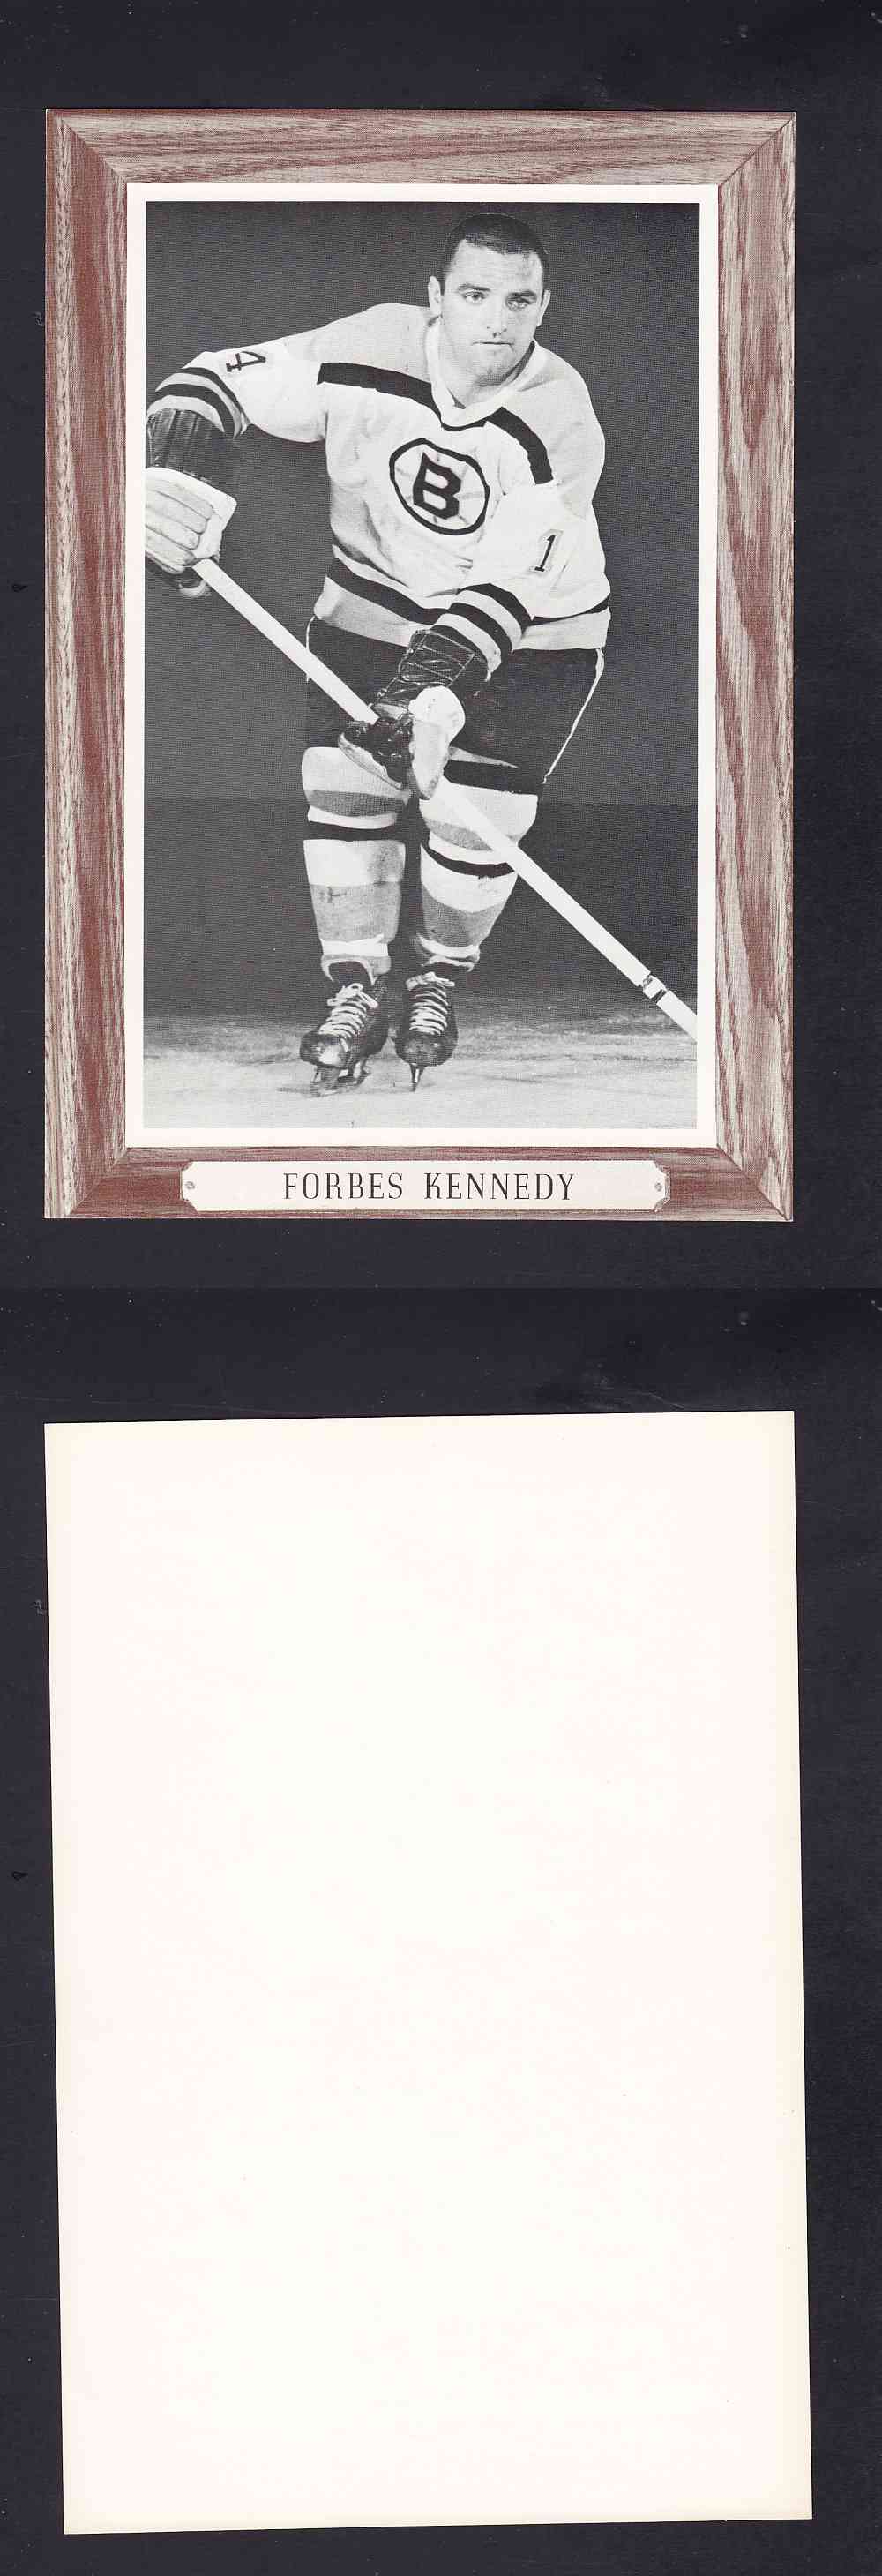 1964-67 BEEHIVE PHOTO GR.3 F. KENNEDY photo